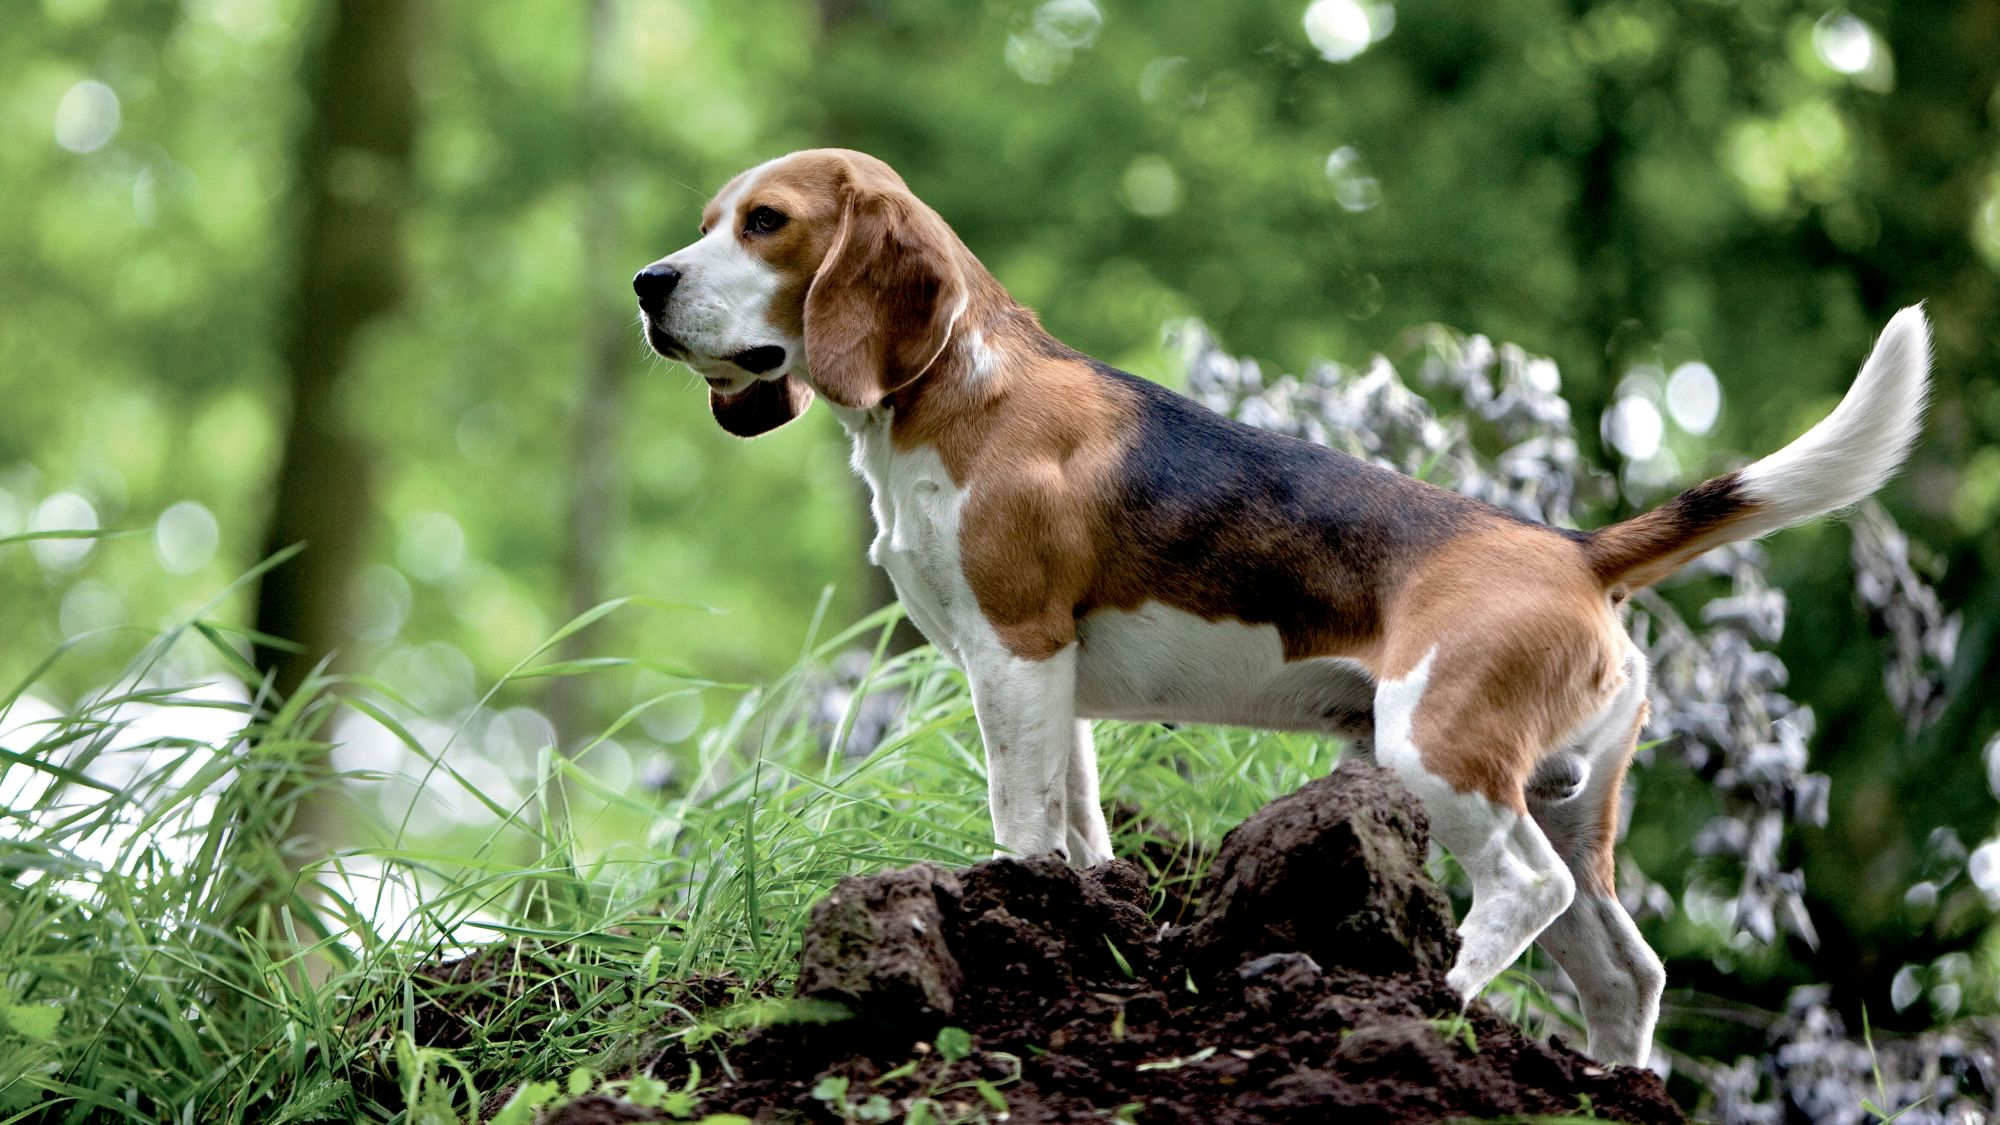 Beagle dog staying alert outdoors